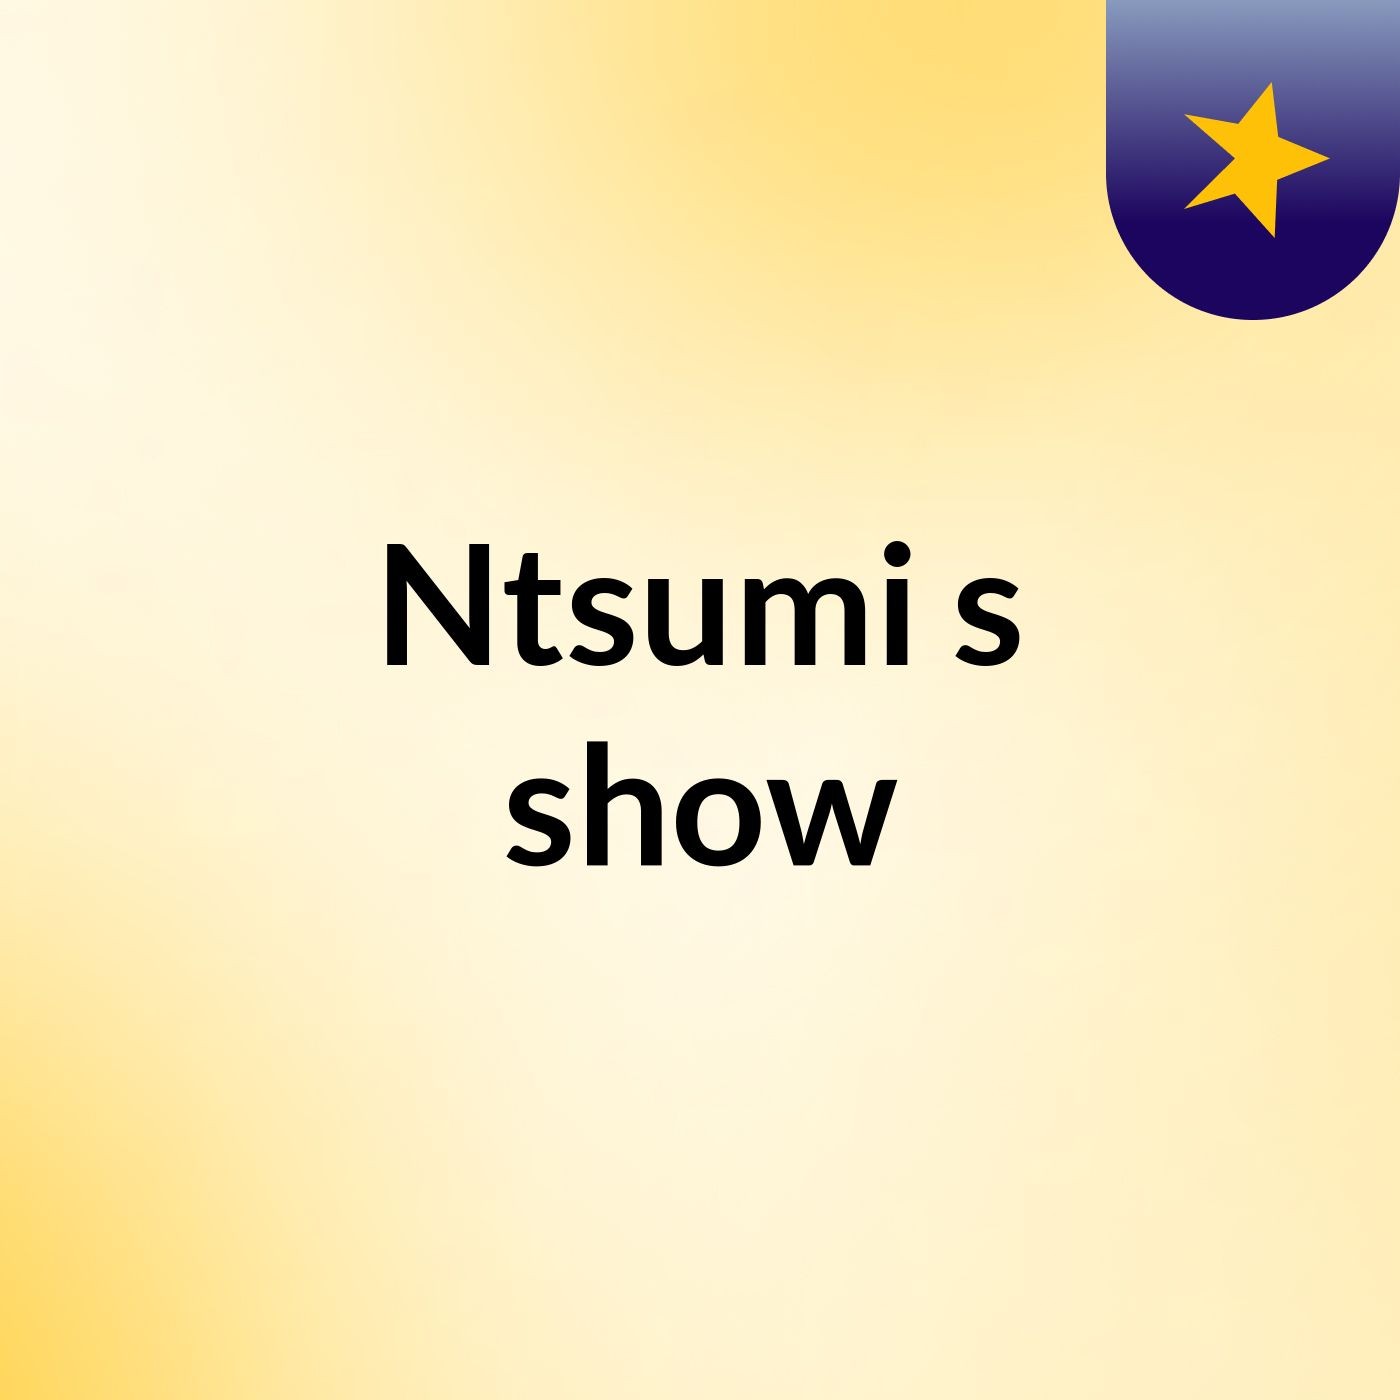 Ntsumi's show